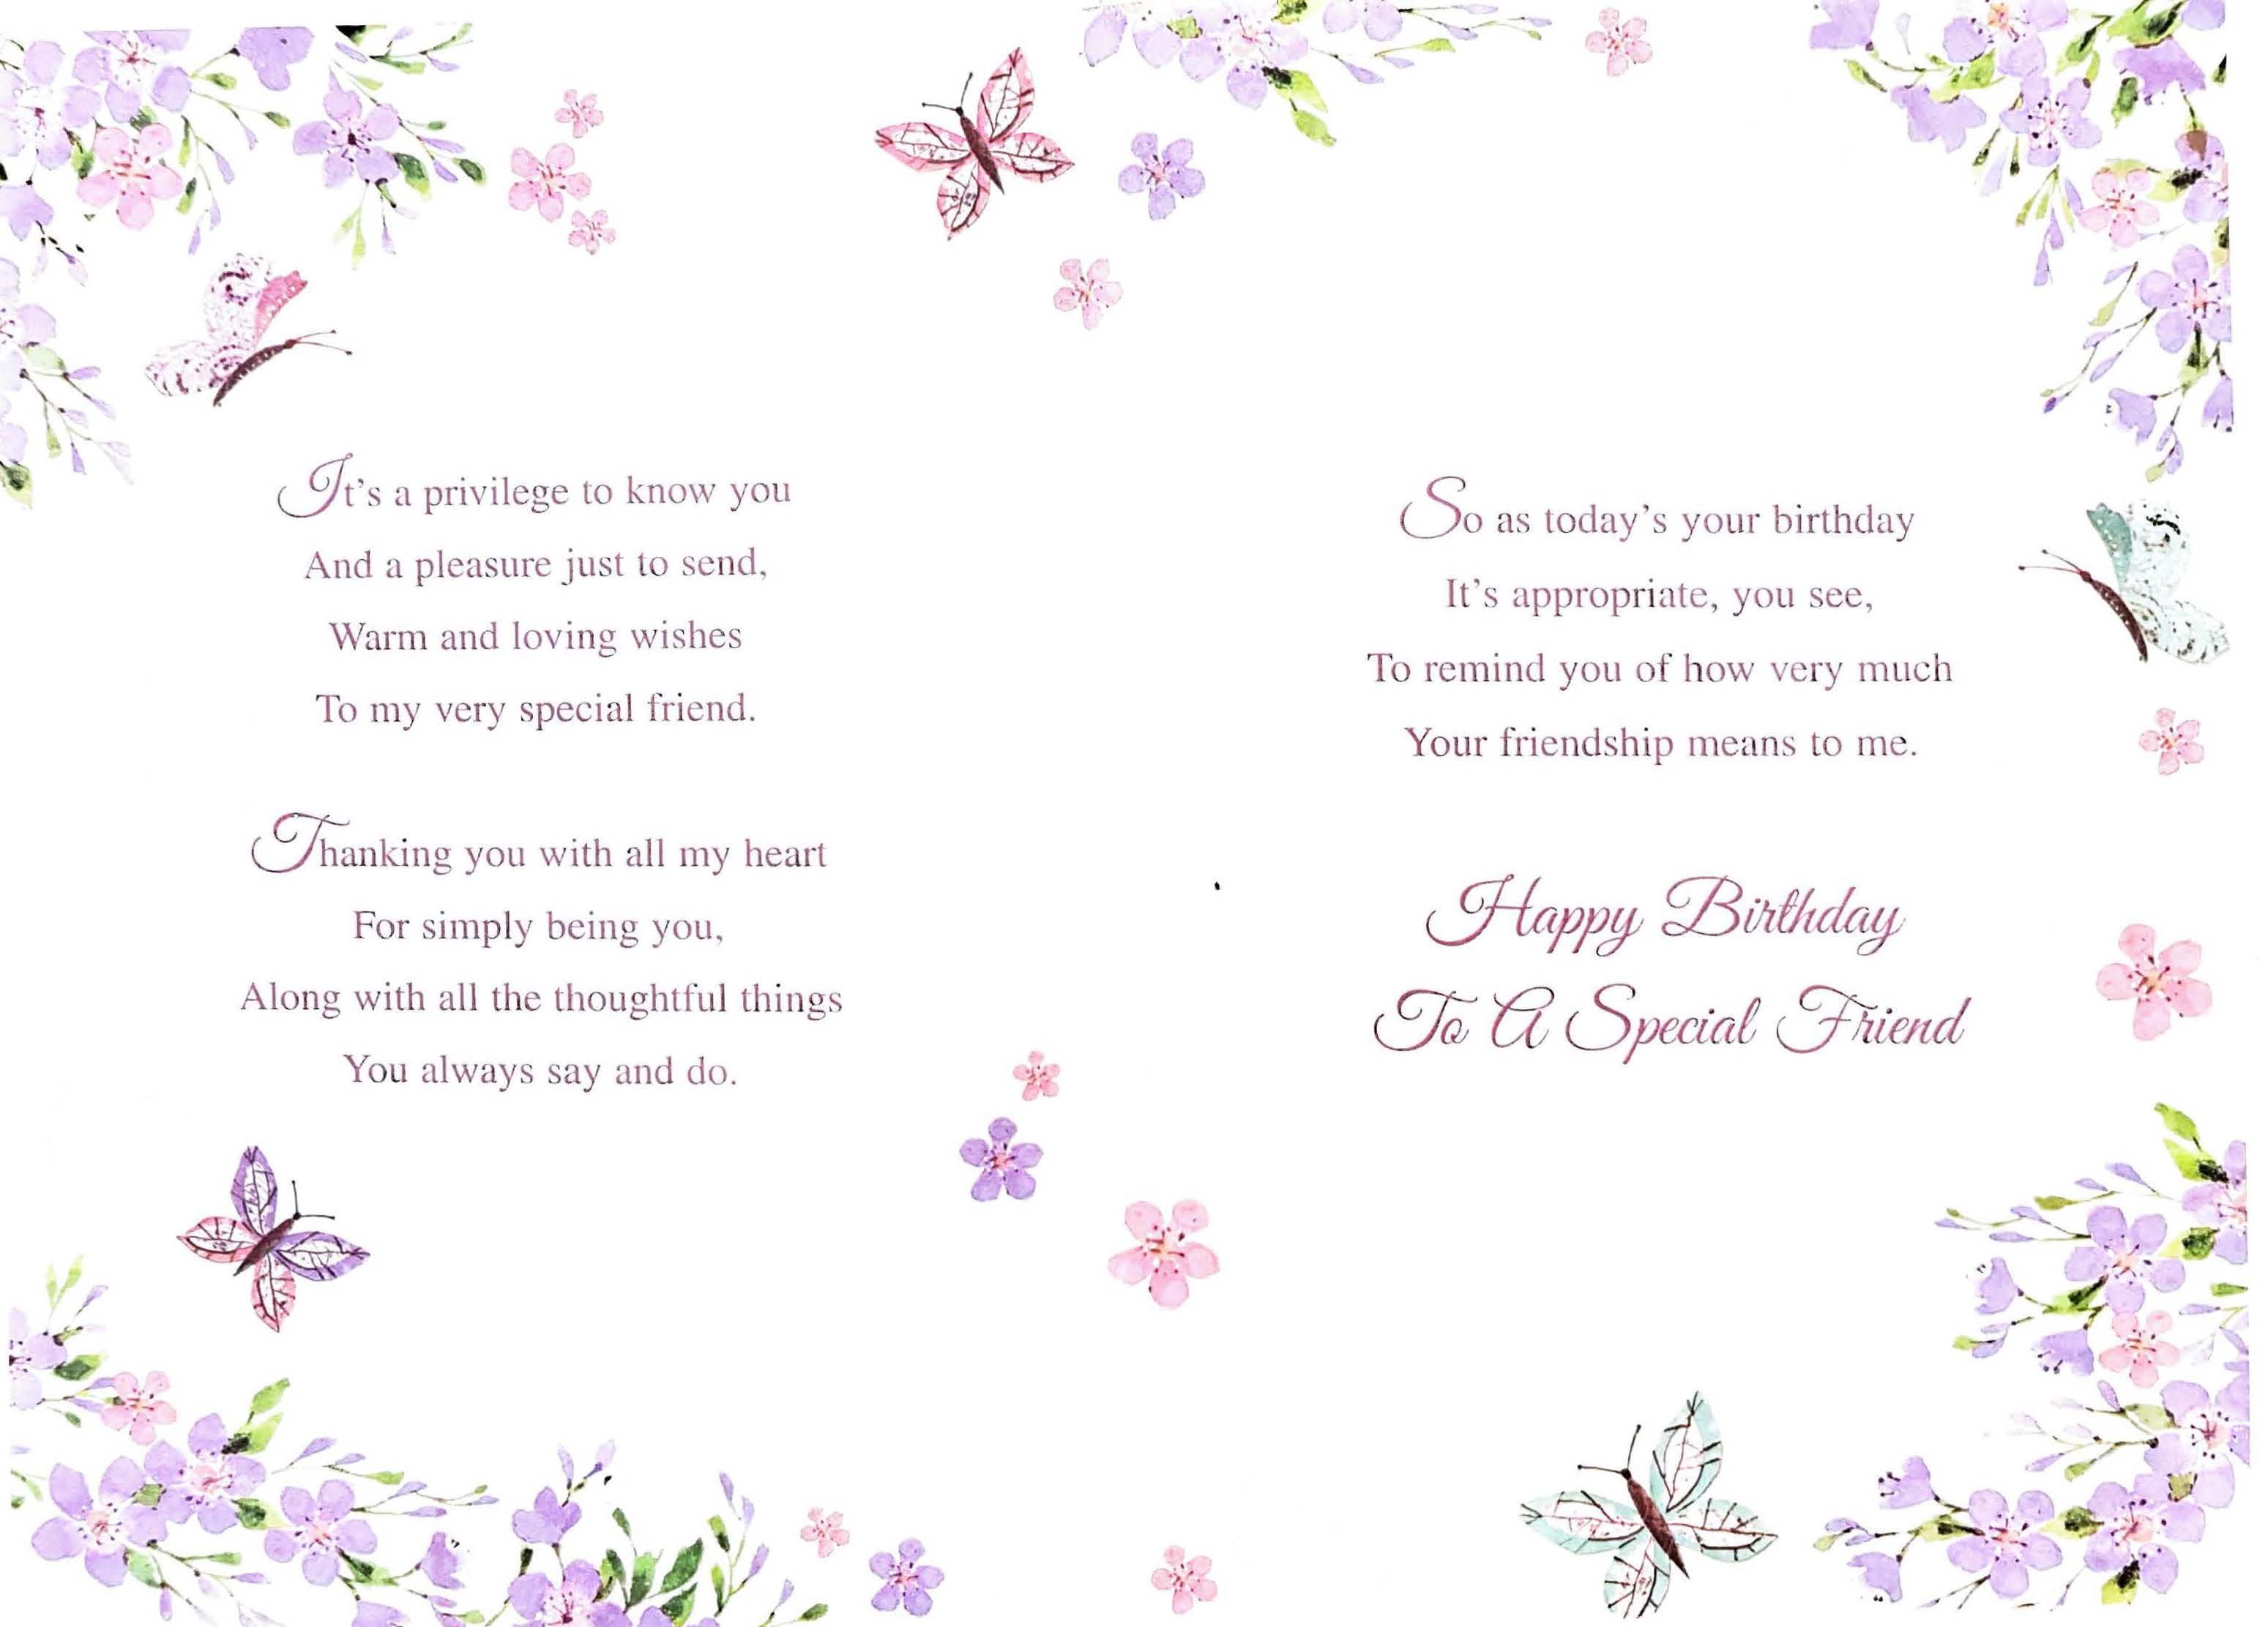 Friend Birthday Card - Purple Florets And Butterflies